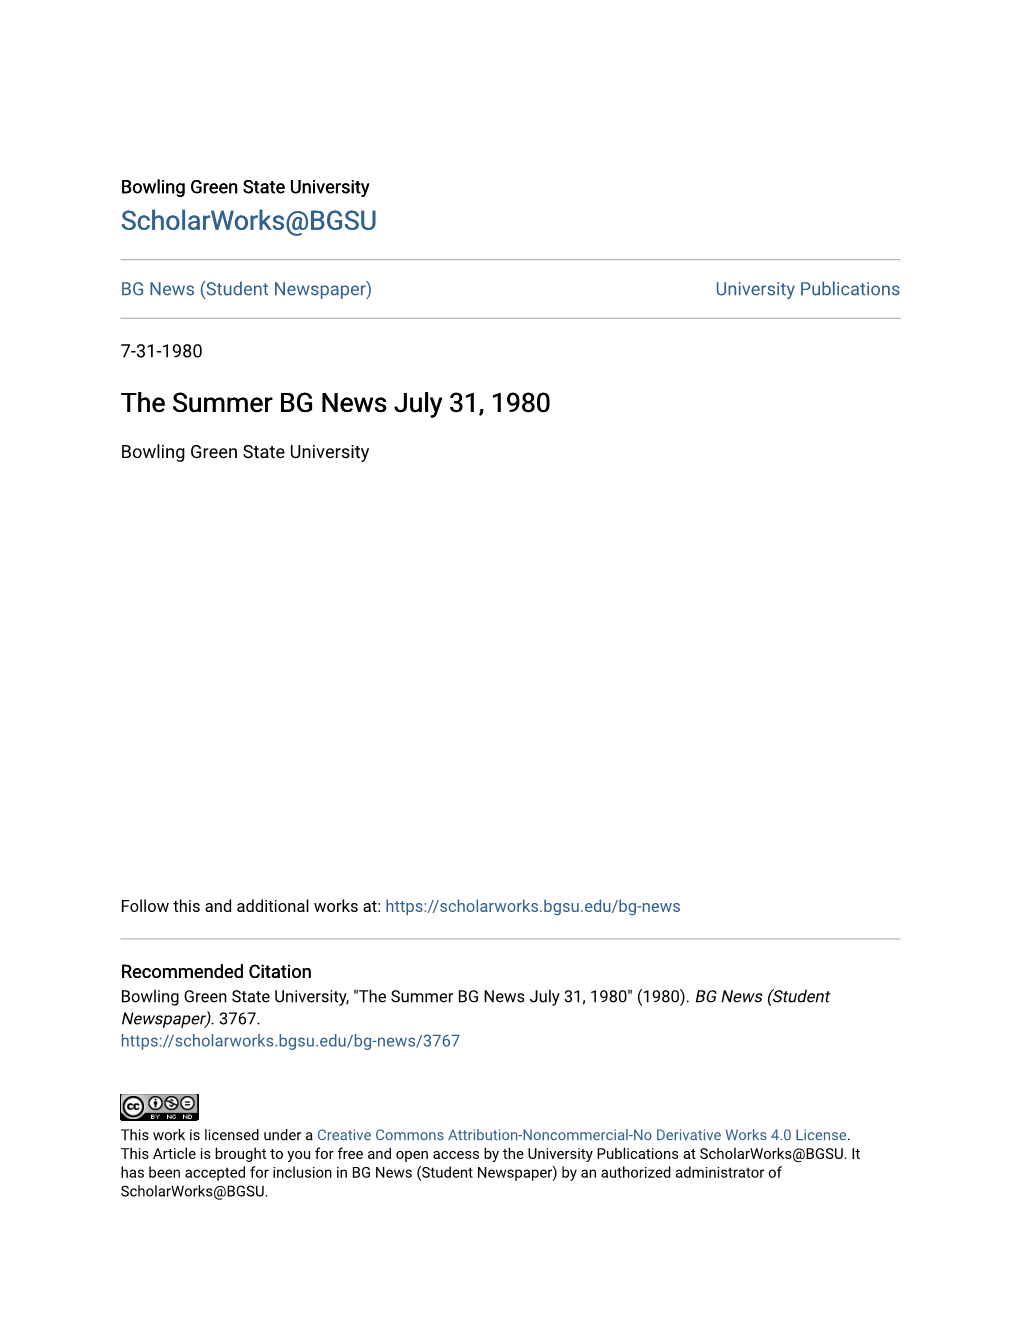 The Summer BG News July 31, 1980